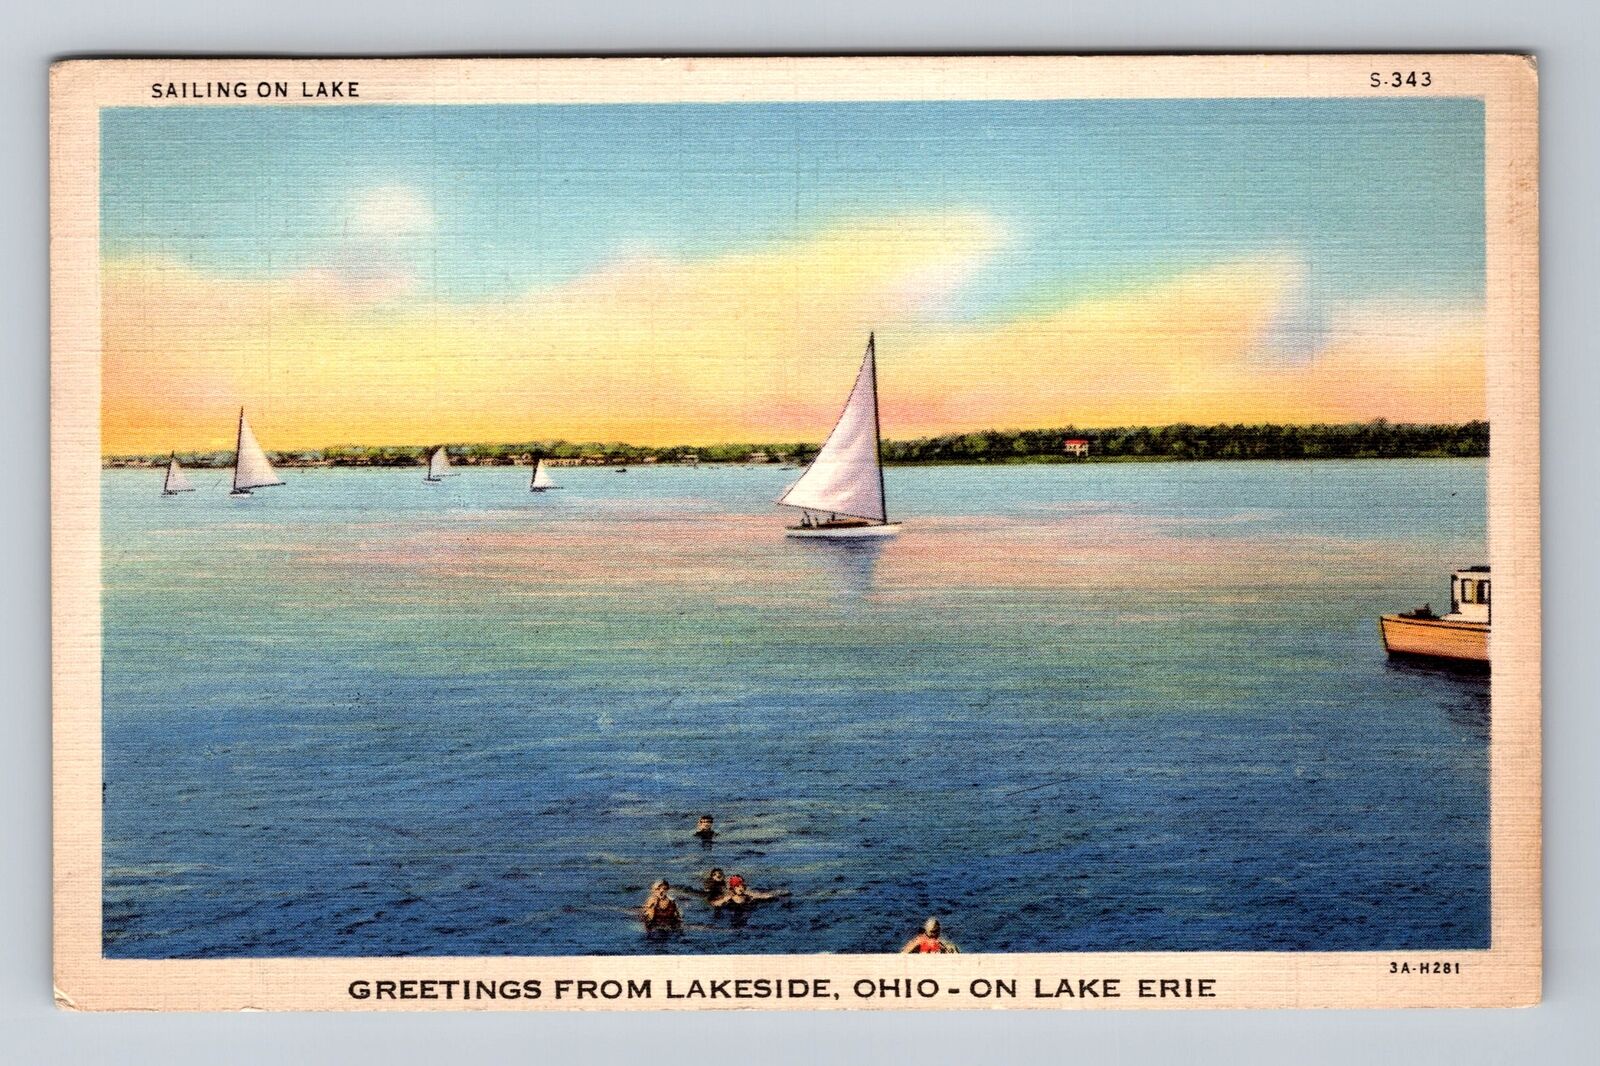 Lakeside OH-Ohio, Scenic Greeting, Sailing on Lake Erie, Vintage c1939 Postcard